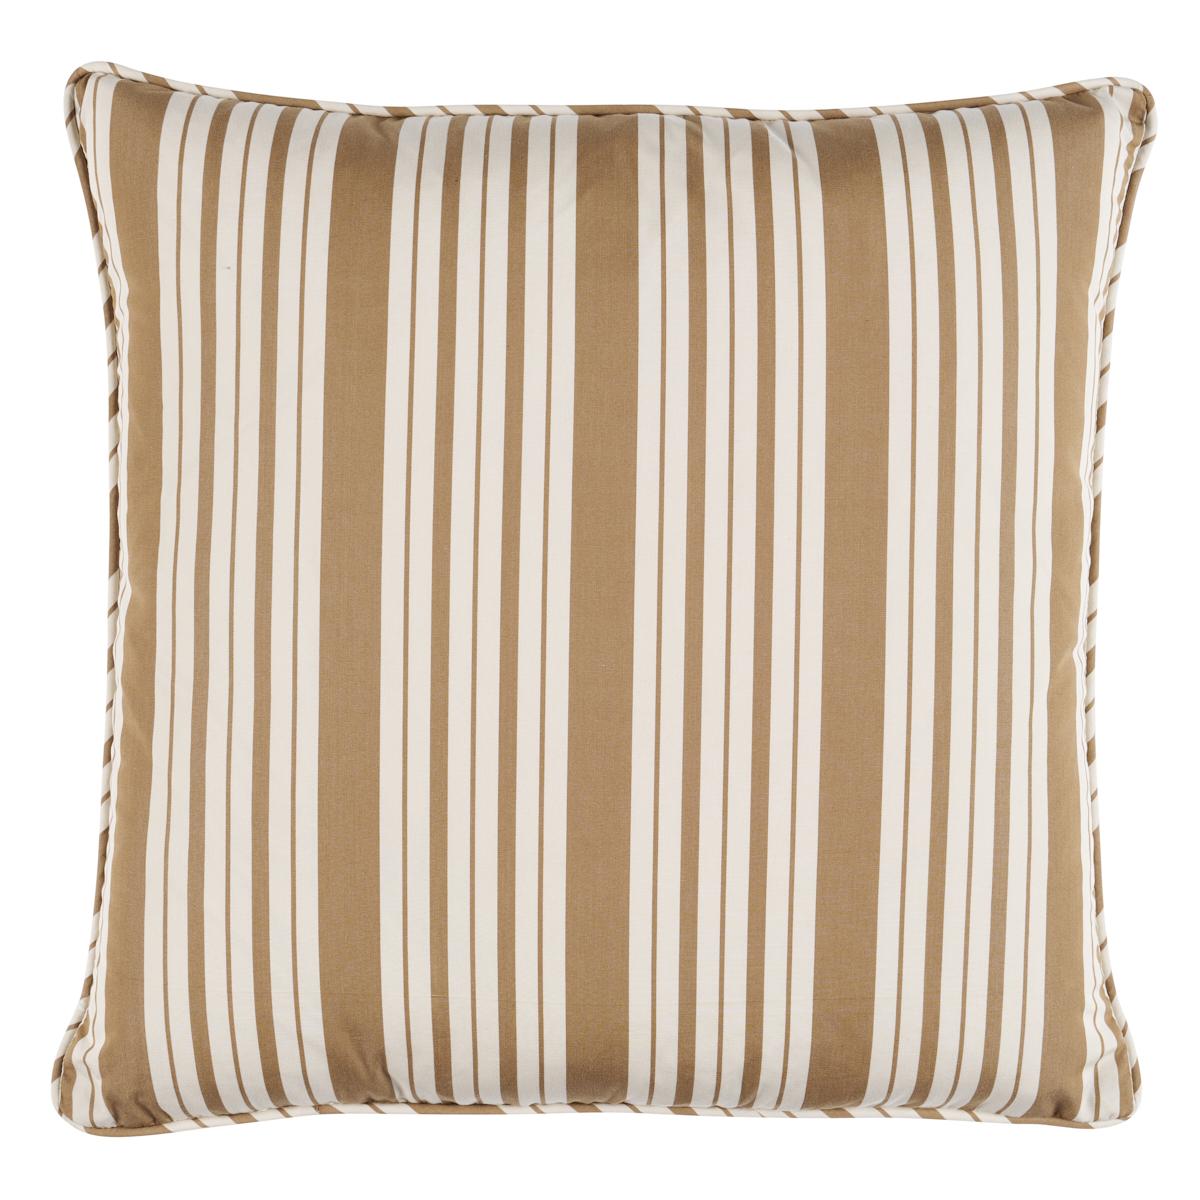 Markie Stripe Pillow in Neutral 22 x 22" For Sale